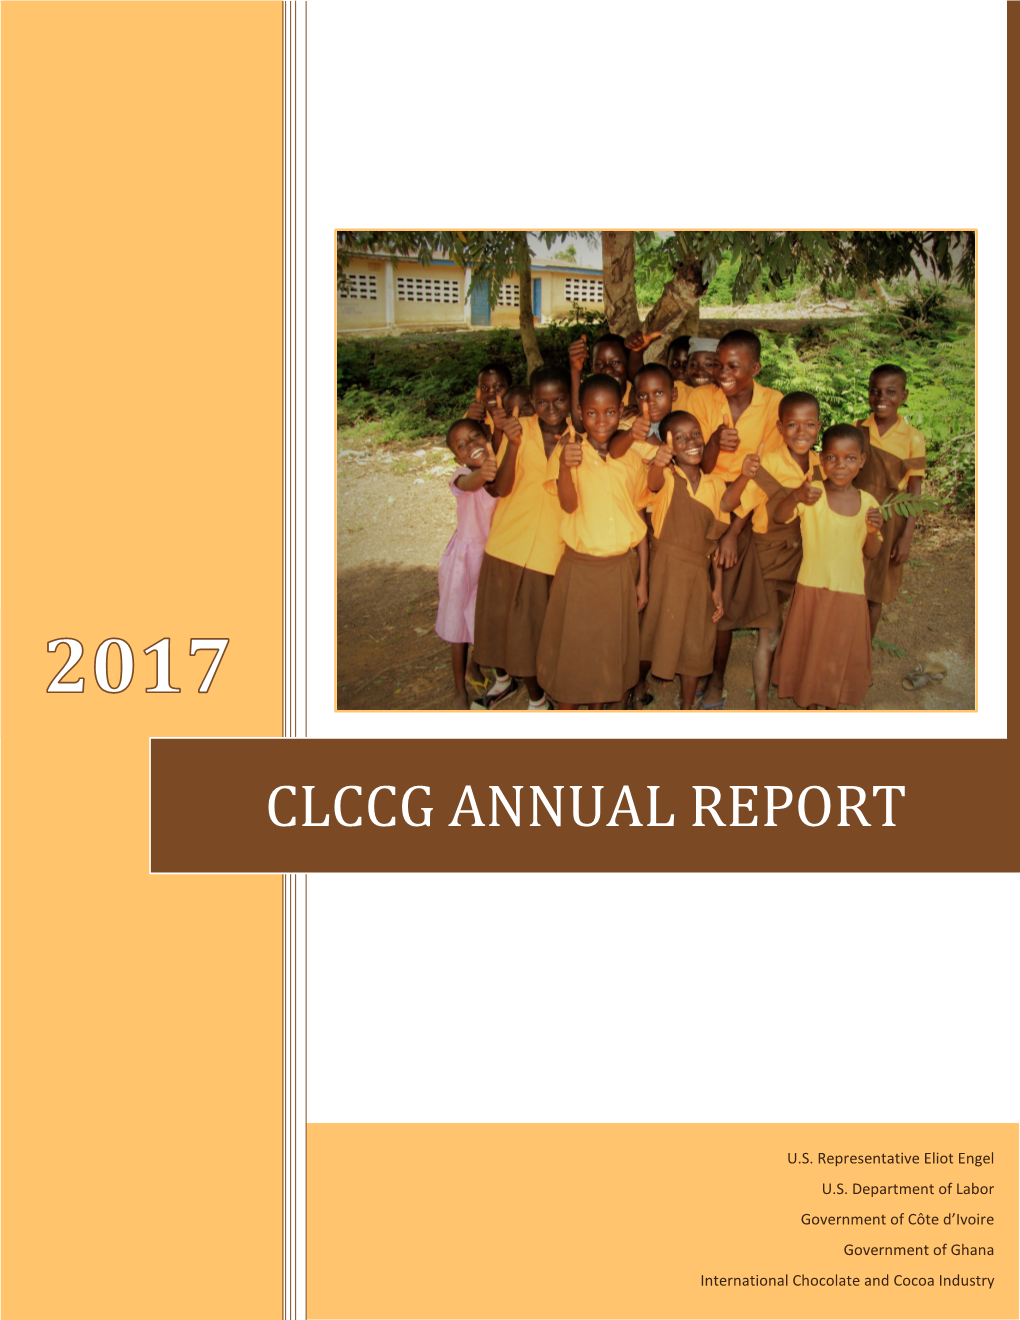 Clccg Annual Report